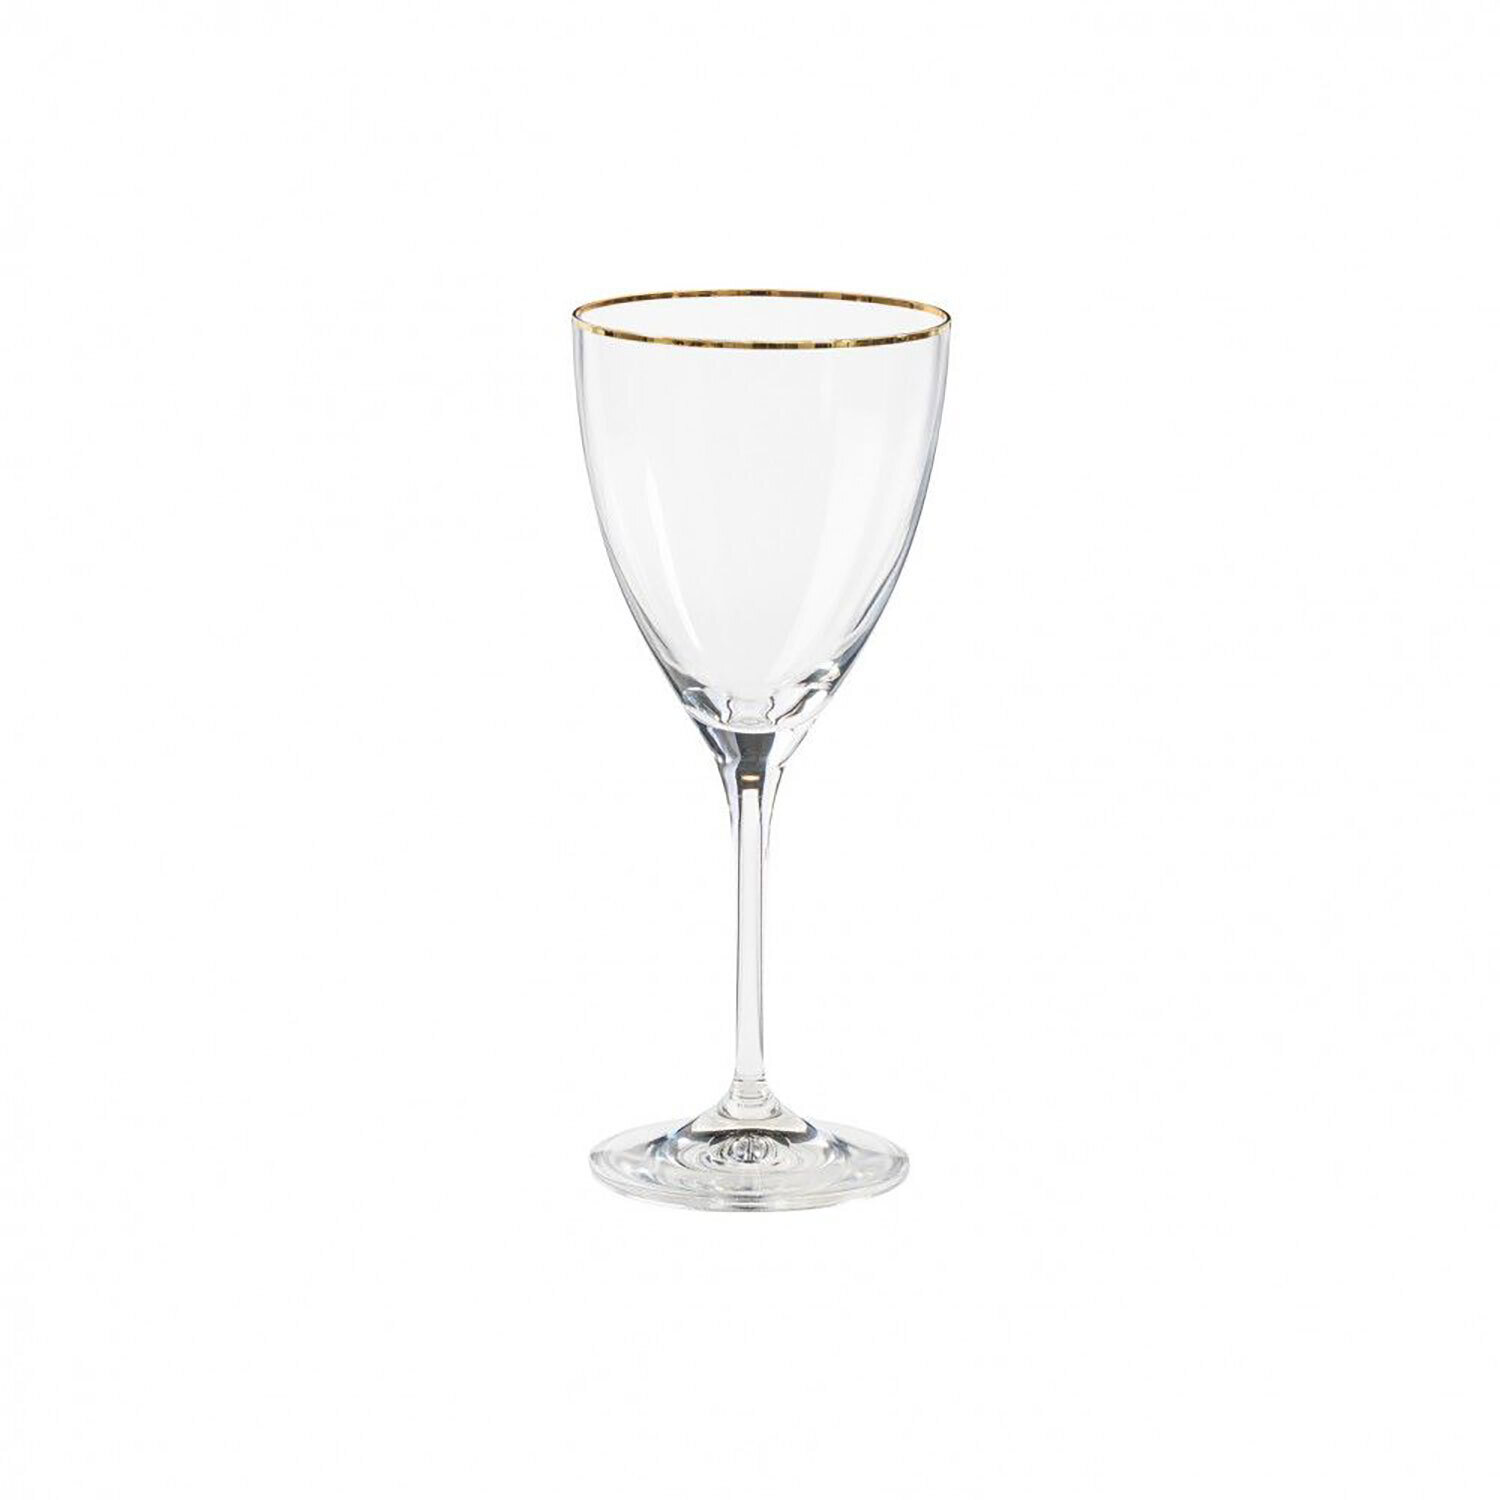 Casafina Sensa Clear With Golden Rim Wine Glass with Golden Rim 9 Oz CFV0075-CGD Set of 6